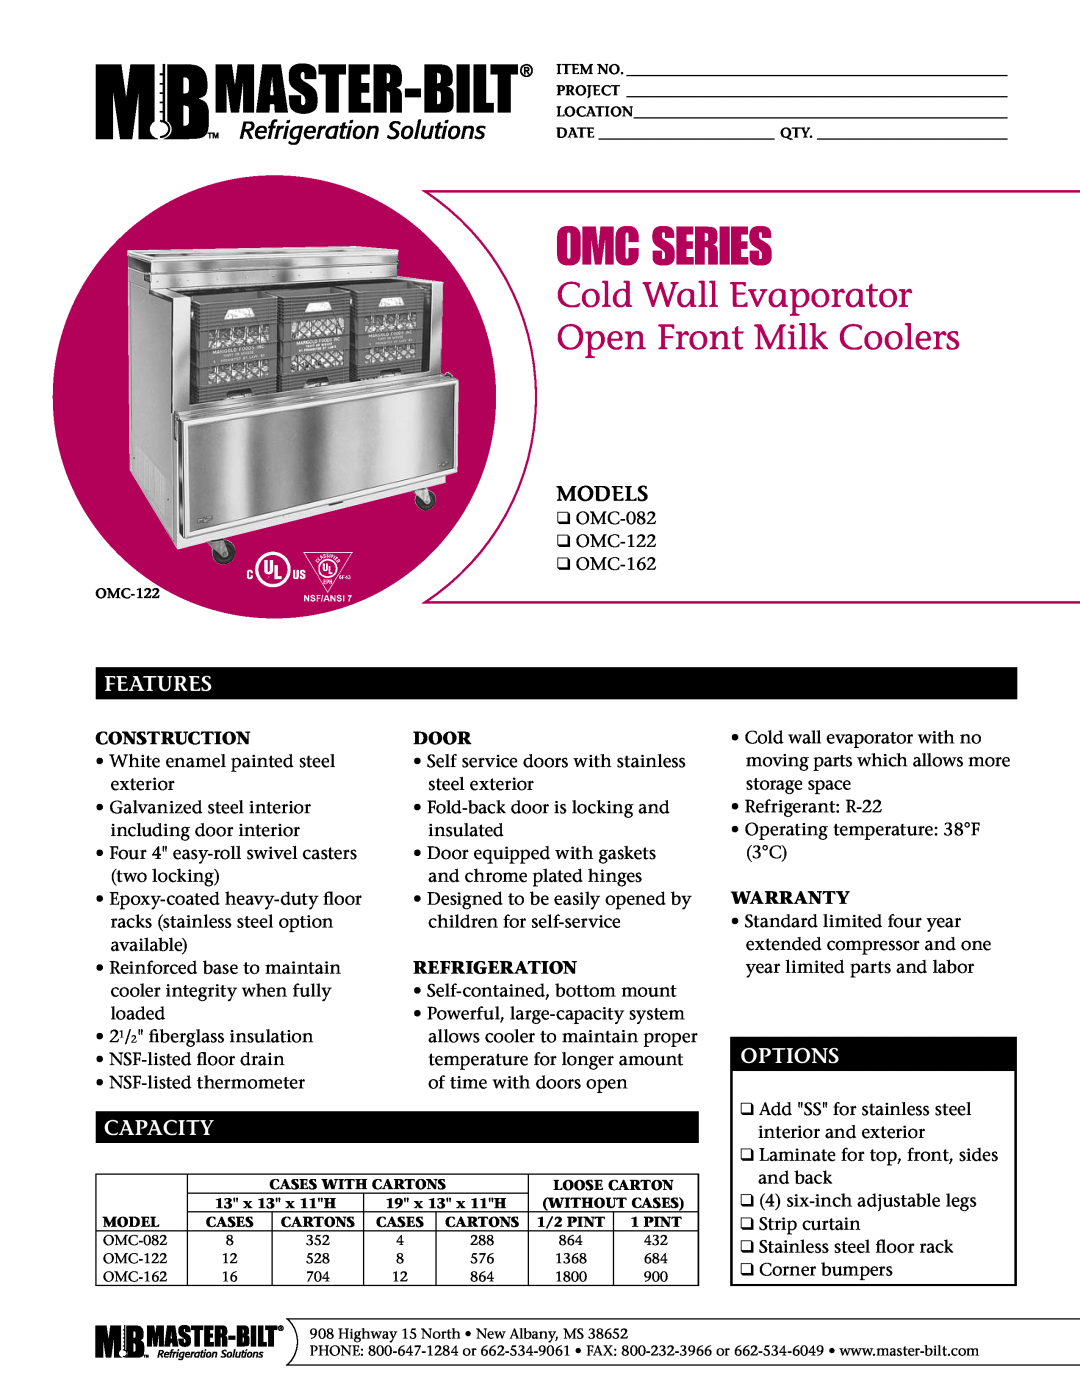 Master Bilt OMC Series warranty Models, Features, Options, Capacity, Omc Series, Construction, Door, Refrigeration 